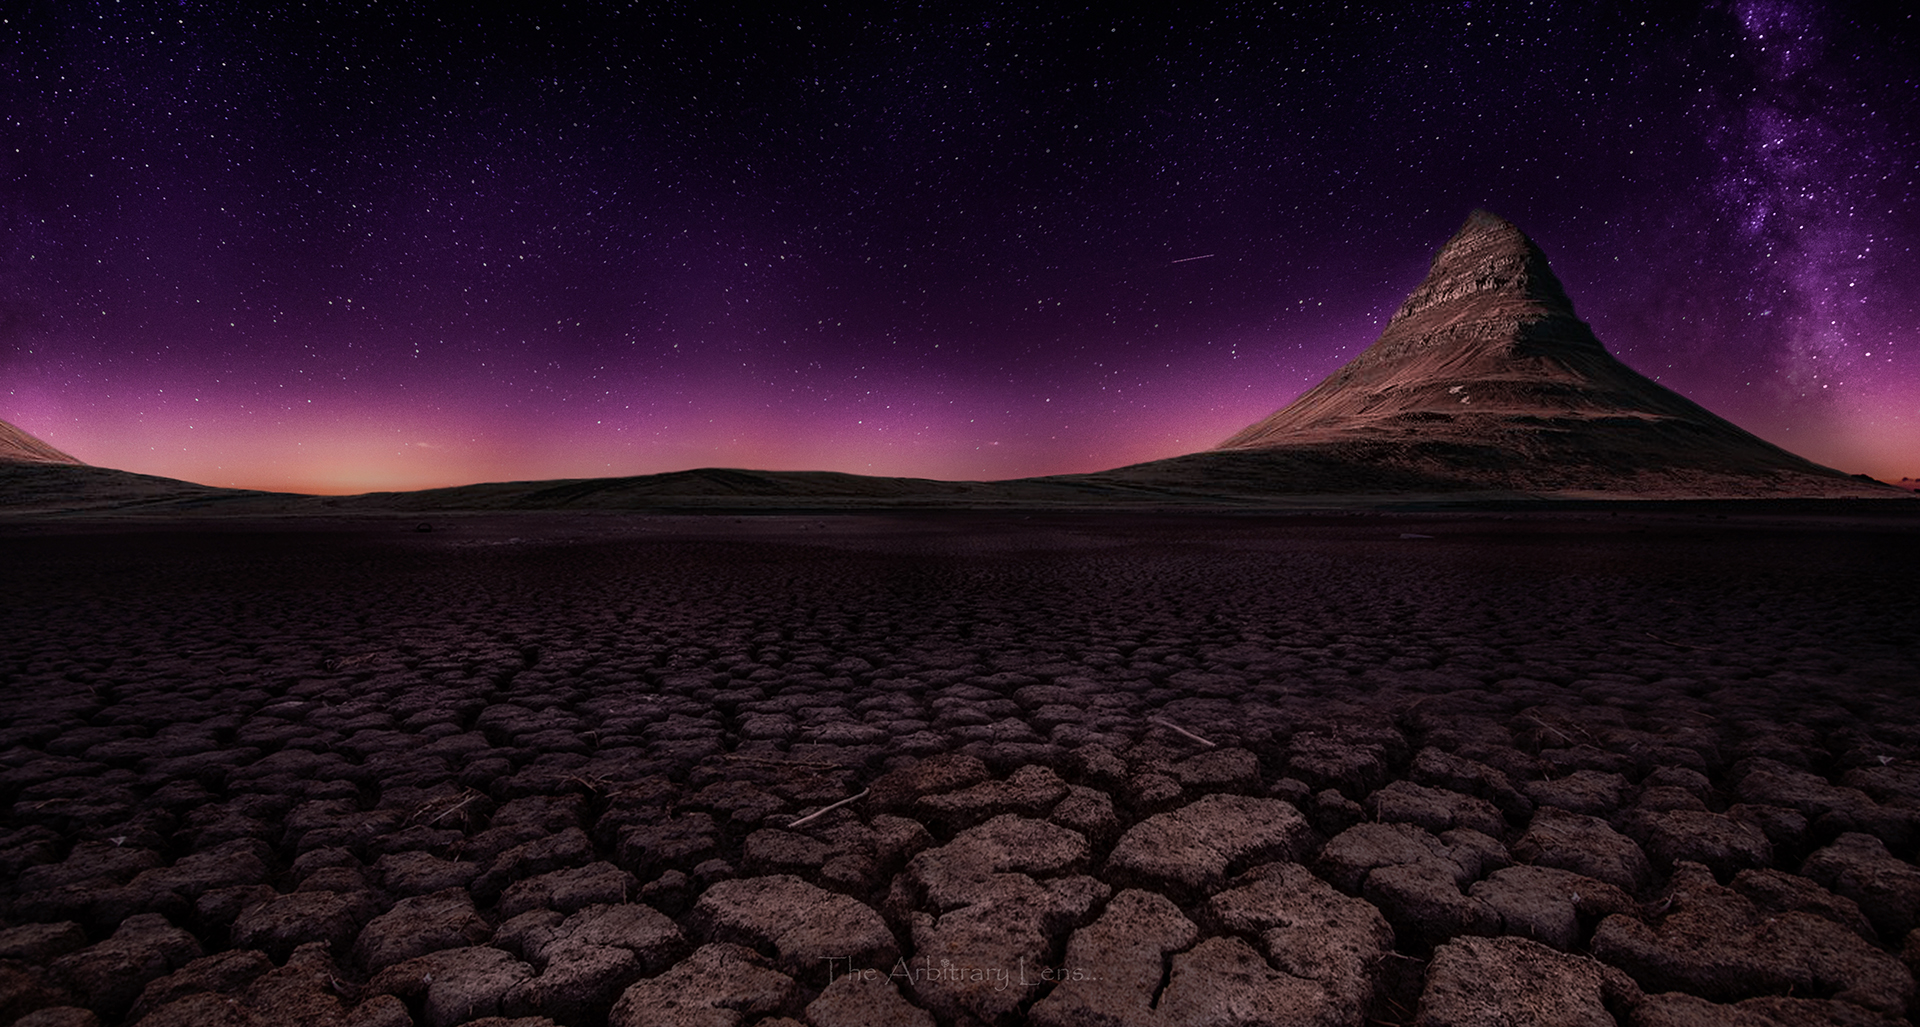 General 1920x1027 stars nightscape desert purple sky